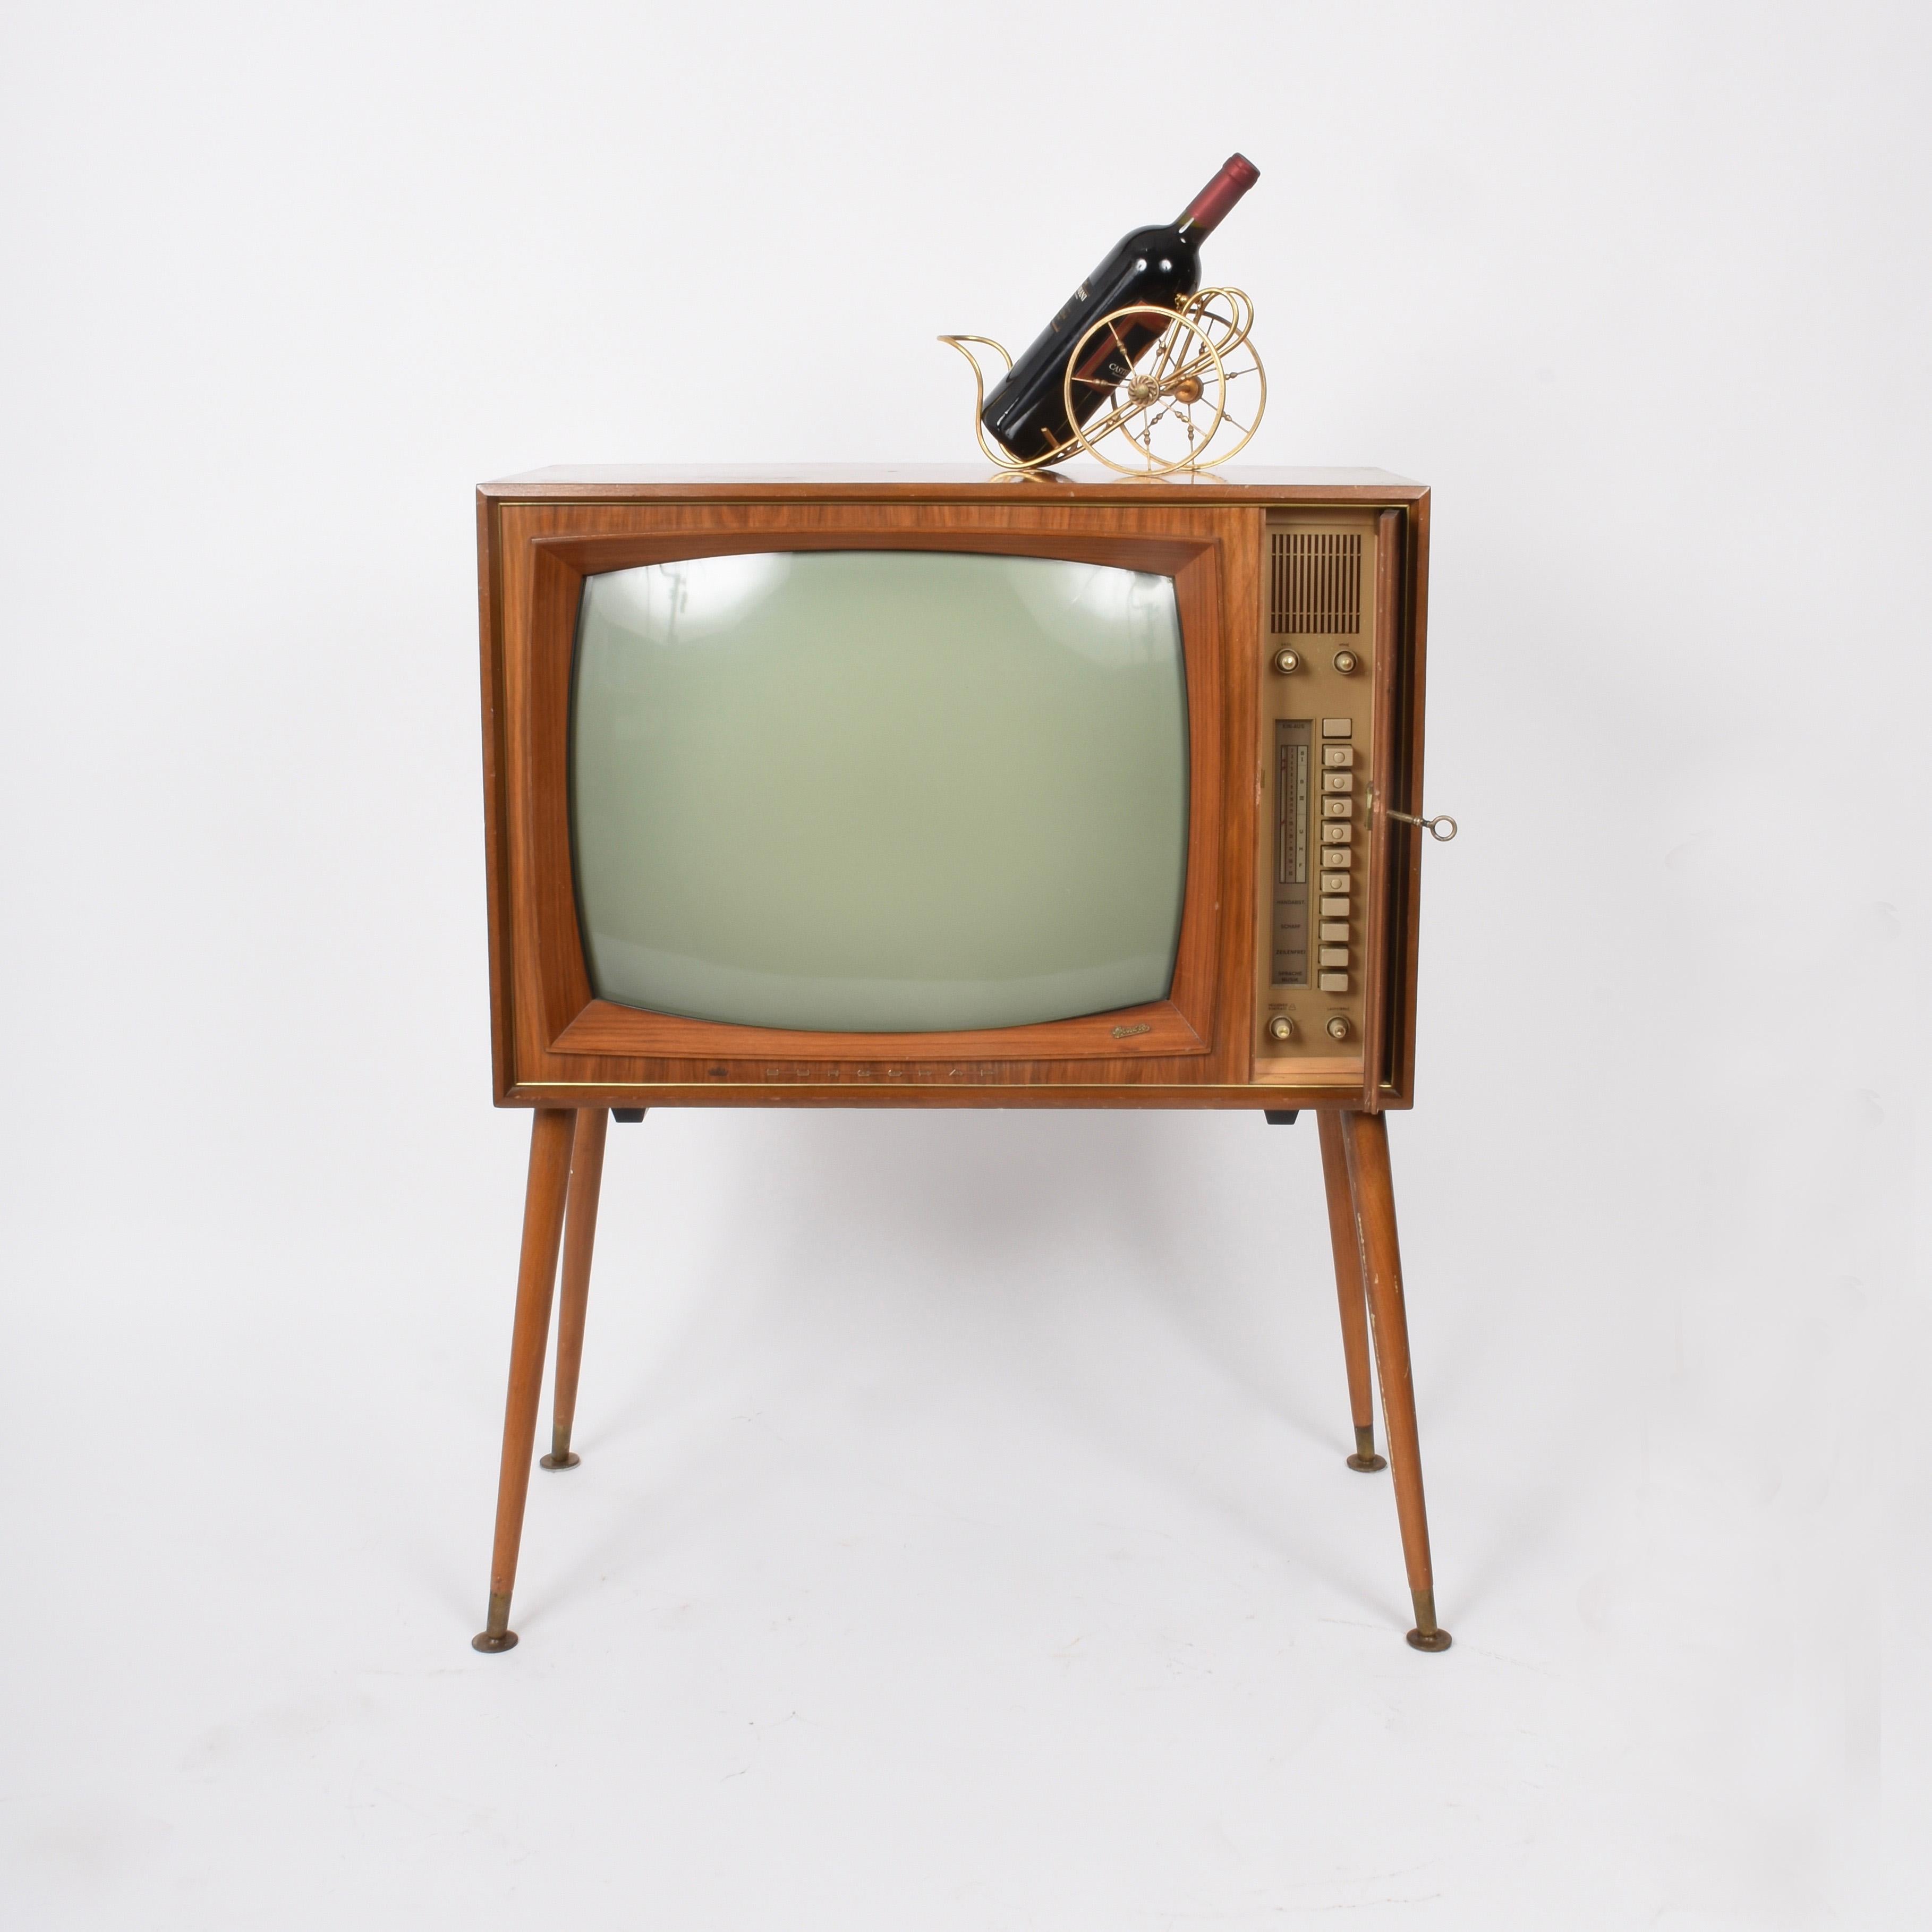 Mid-20th Century Vintage Tv Graetz Burggraf, 1960s Wooden Floor Television, Midcentury